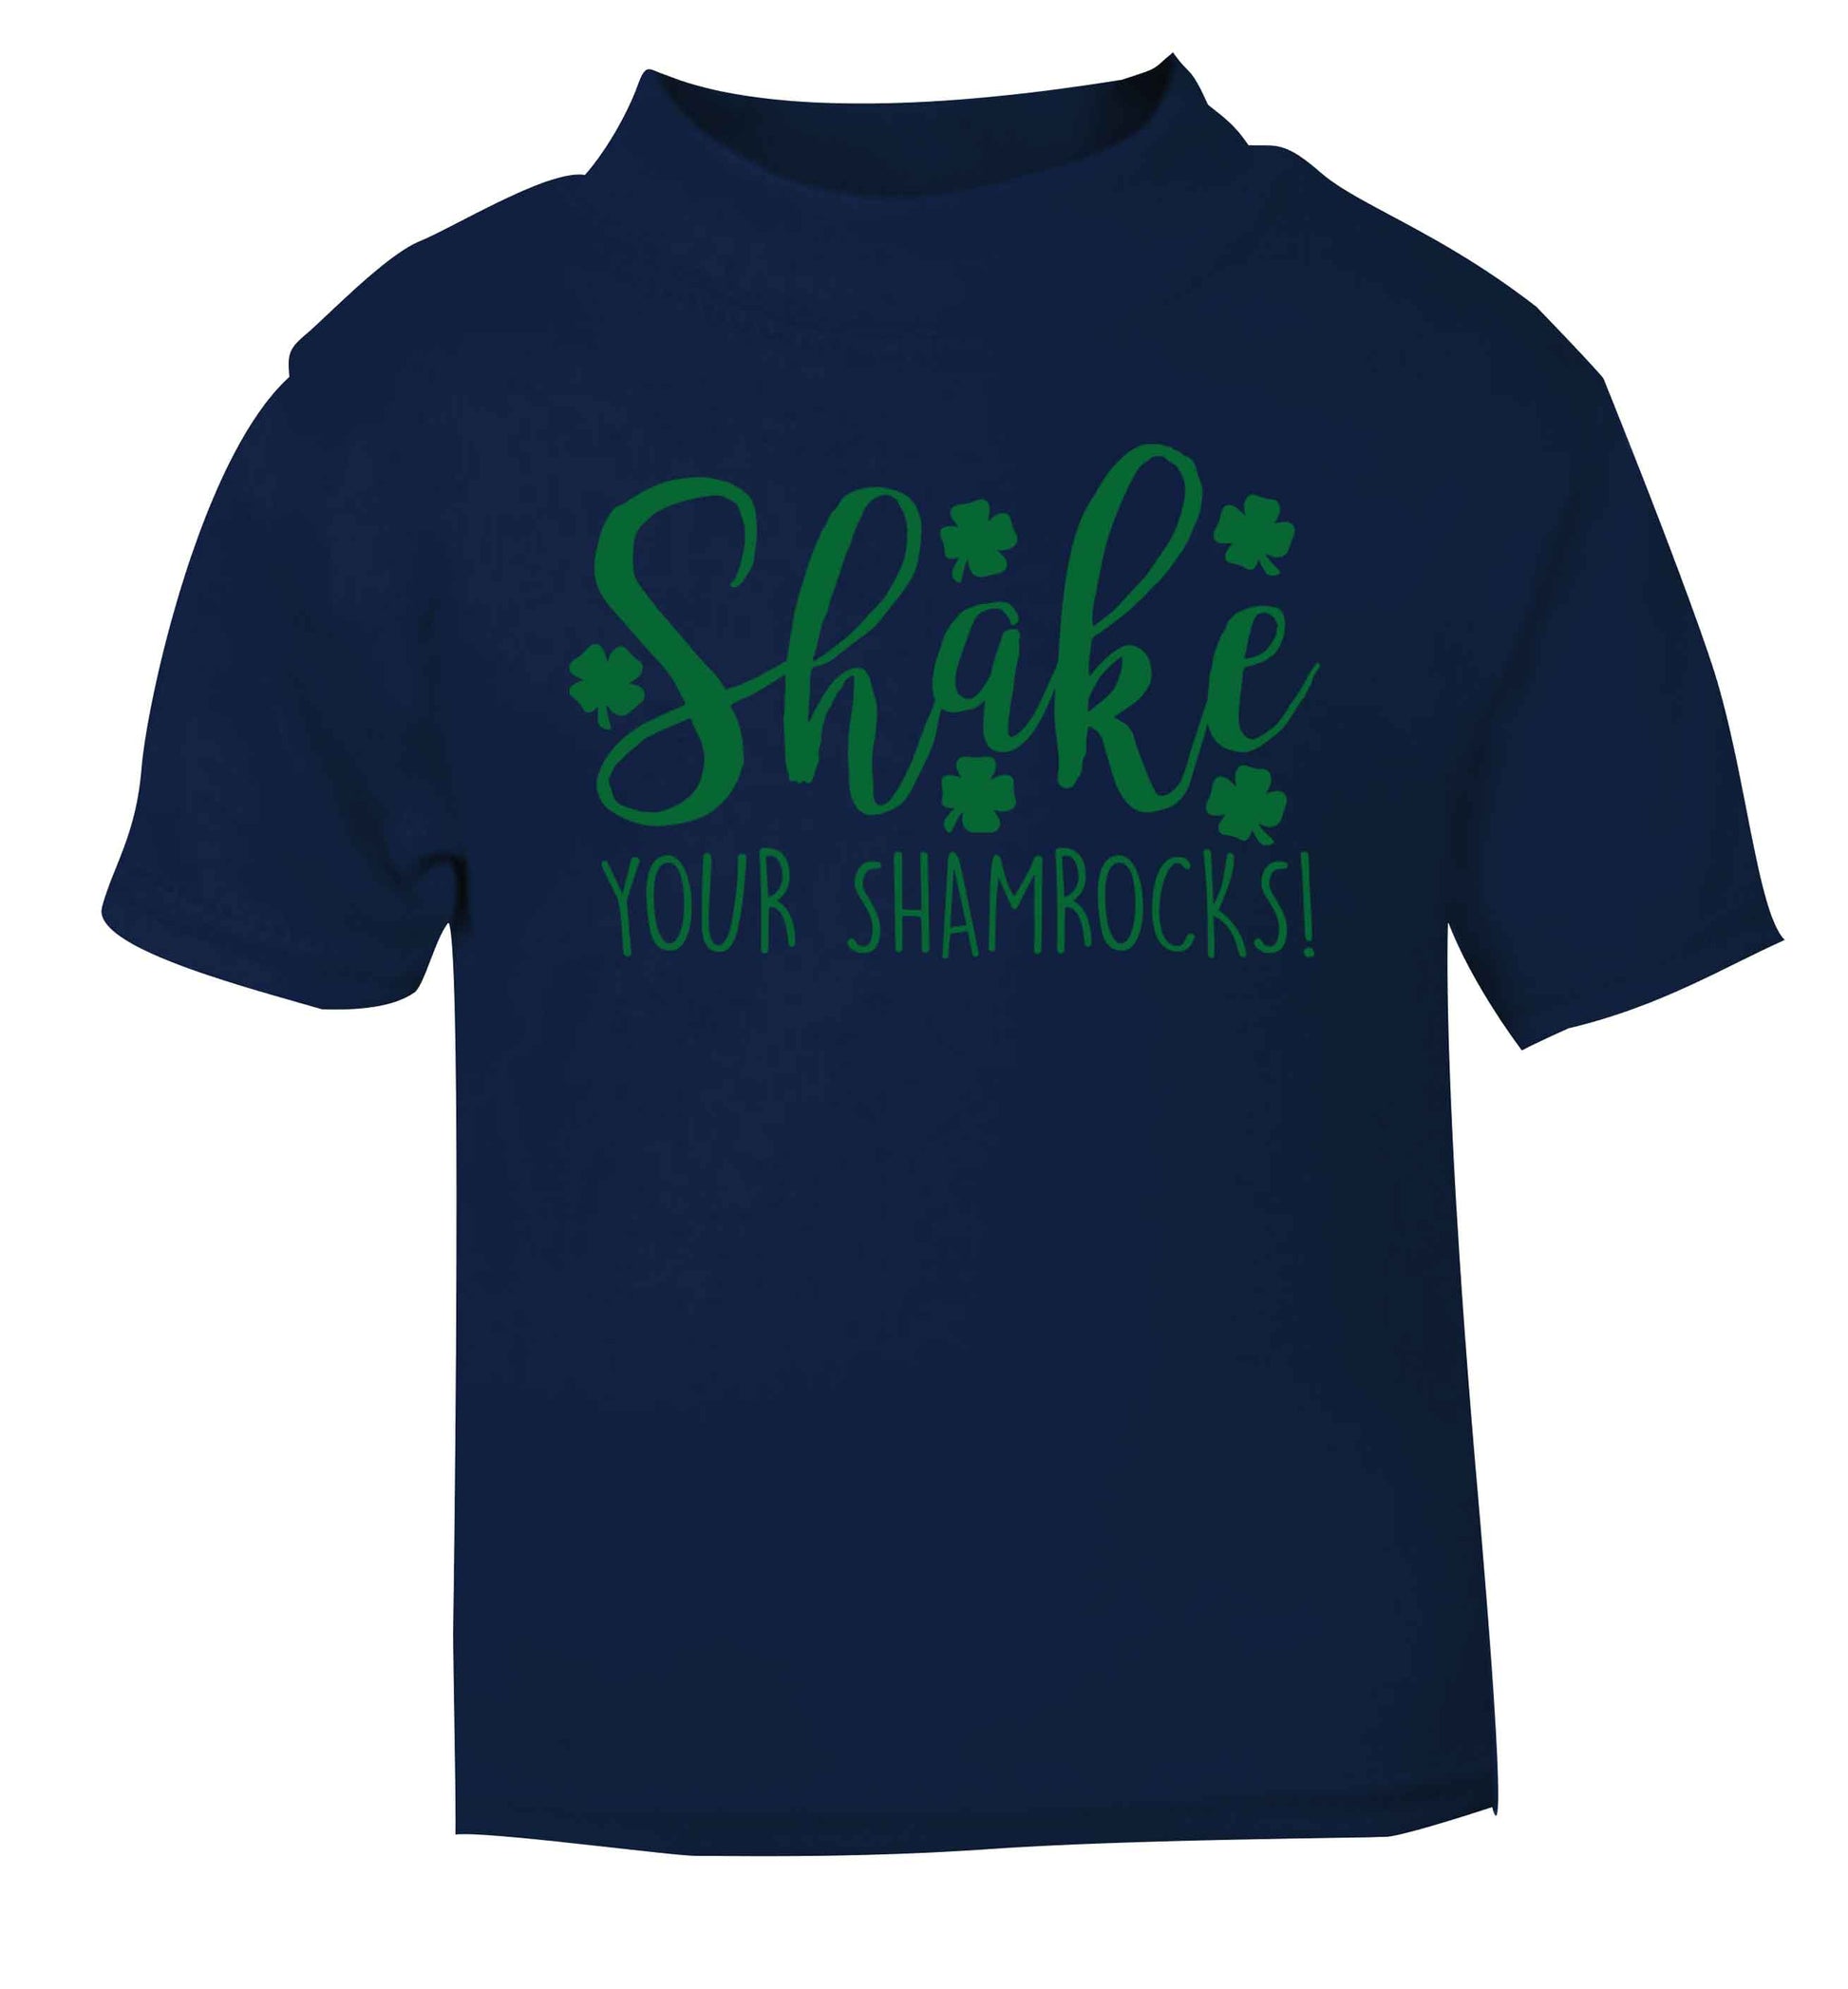 Shake your shamrocks navy baby toddler Tshirt 2 Years